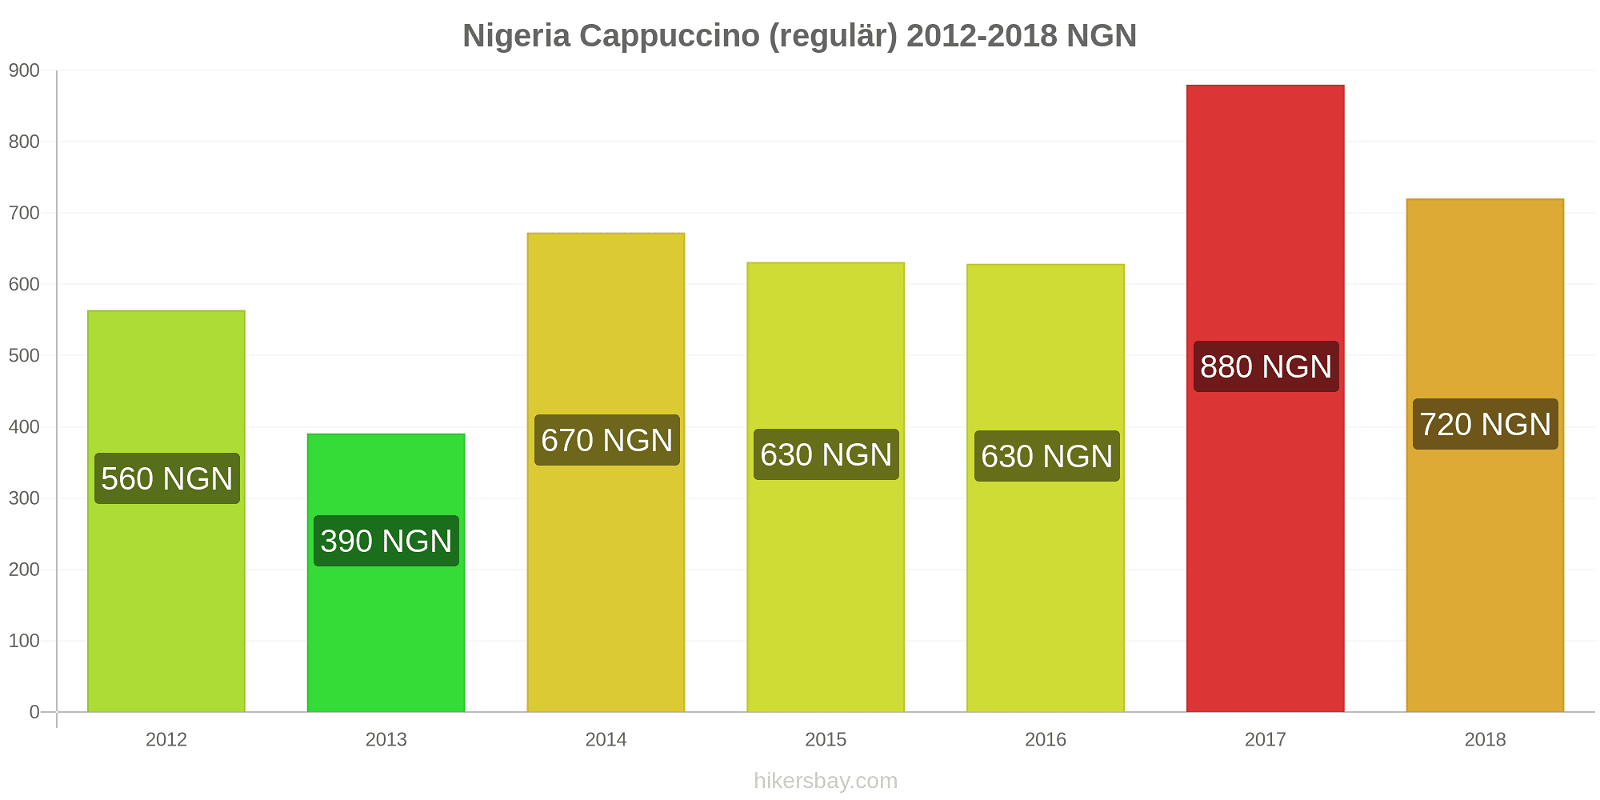 Nigeria Preisänderungen Cappuccino (regulär) hikersbay.com